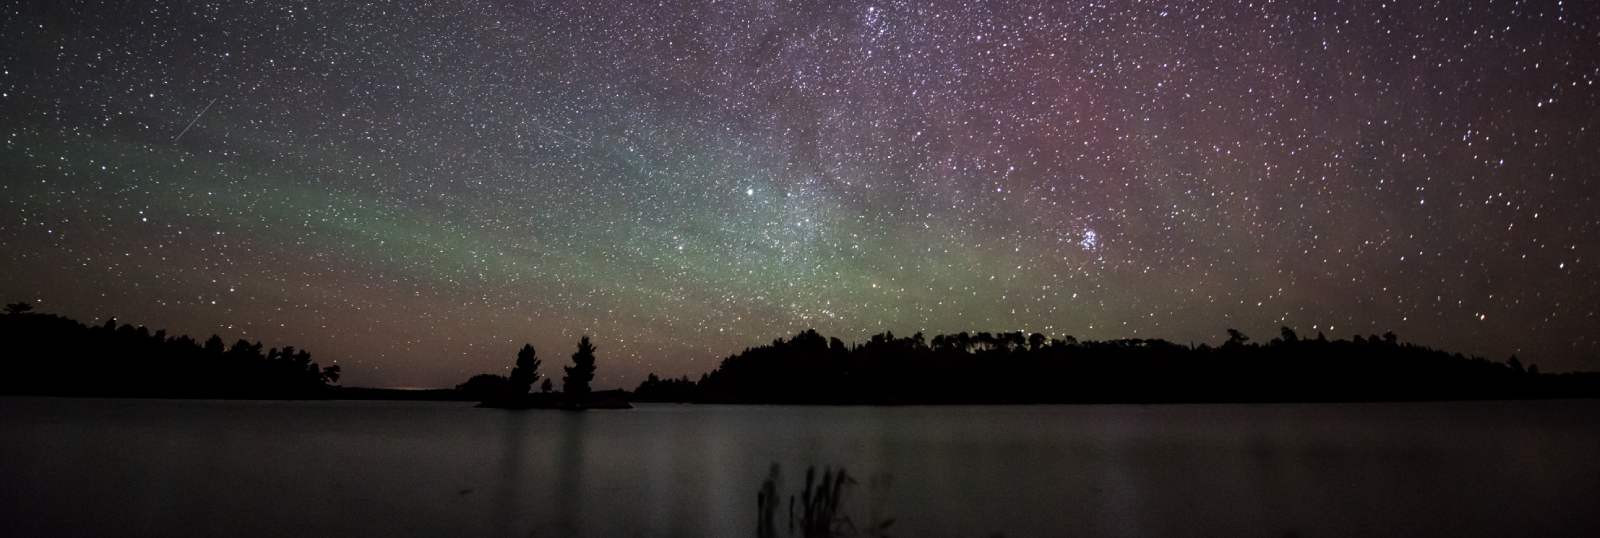 Dark Sky Programming at Voyageurs National Park